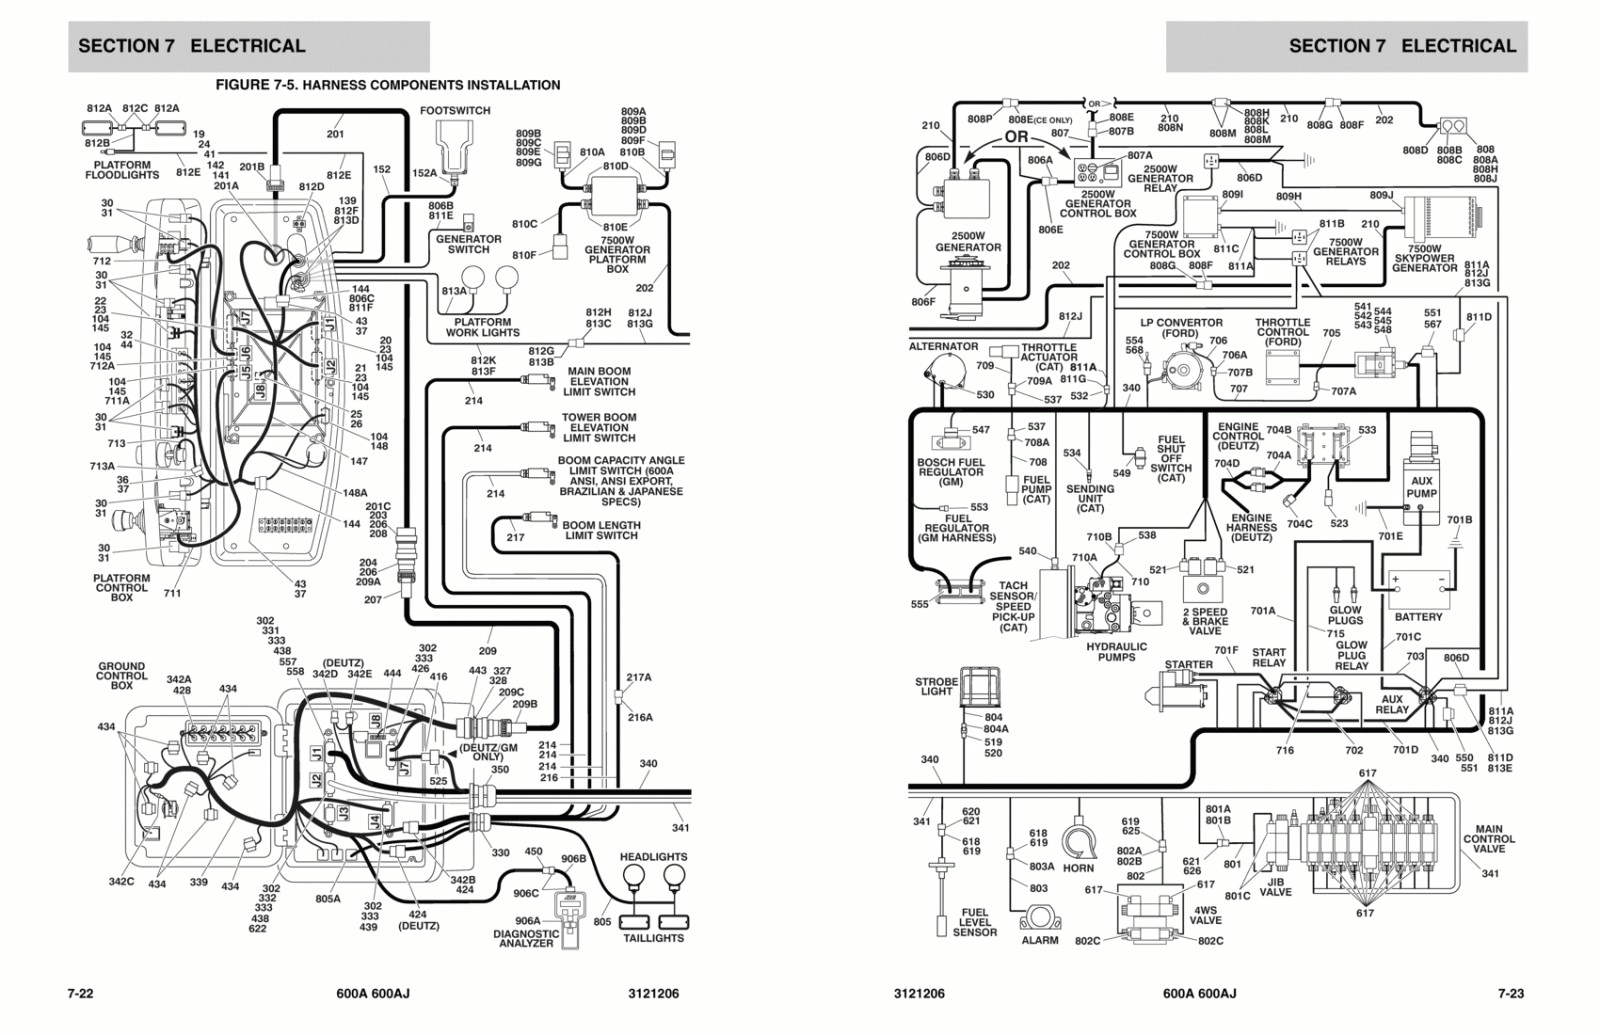 lull wiring diagrams wiring diagram schematic 844c lull wiring diagram wiring diagram name lull wiring diagram